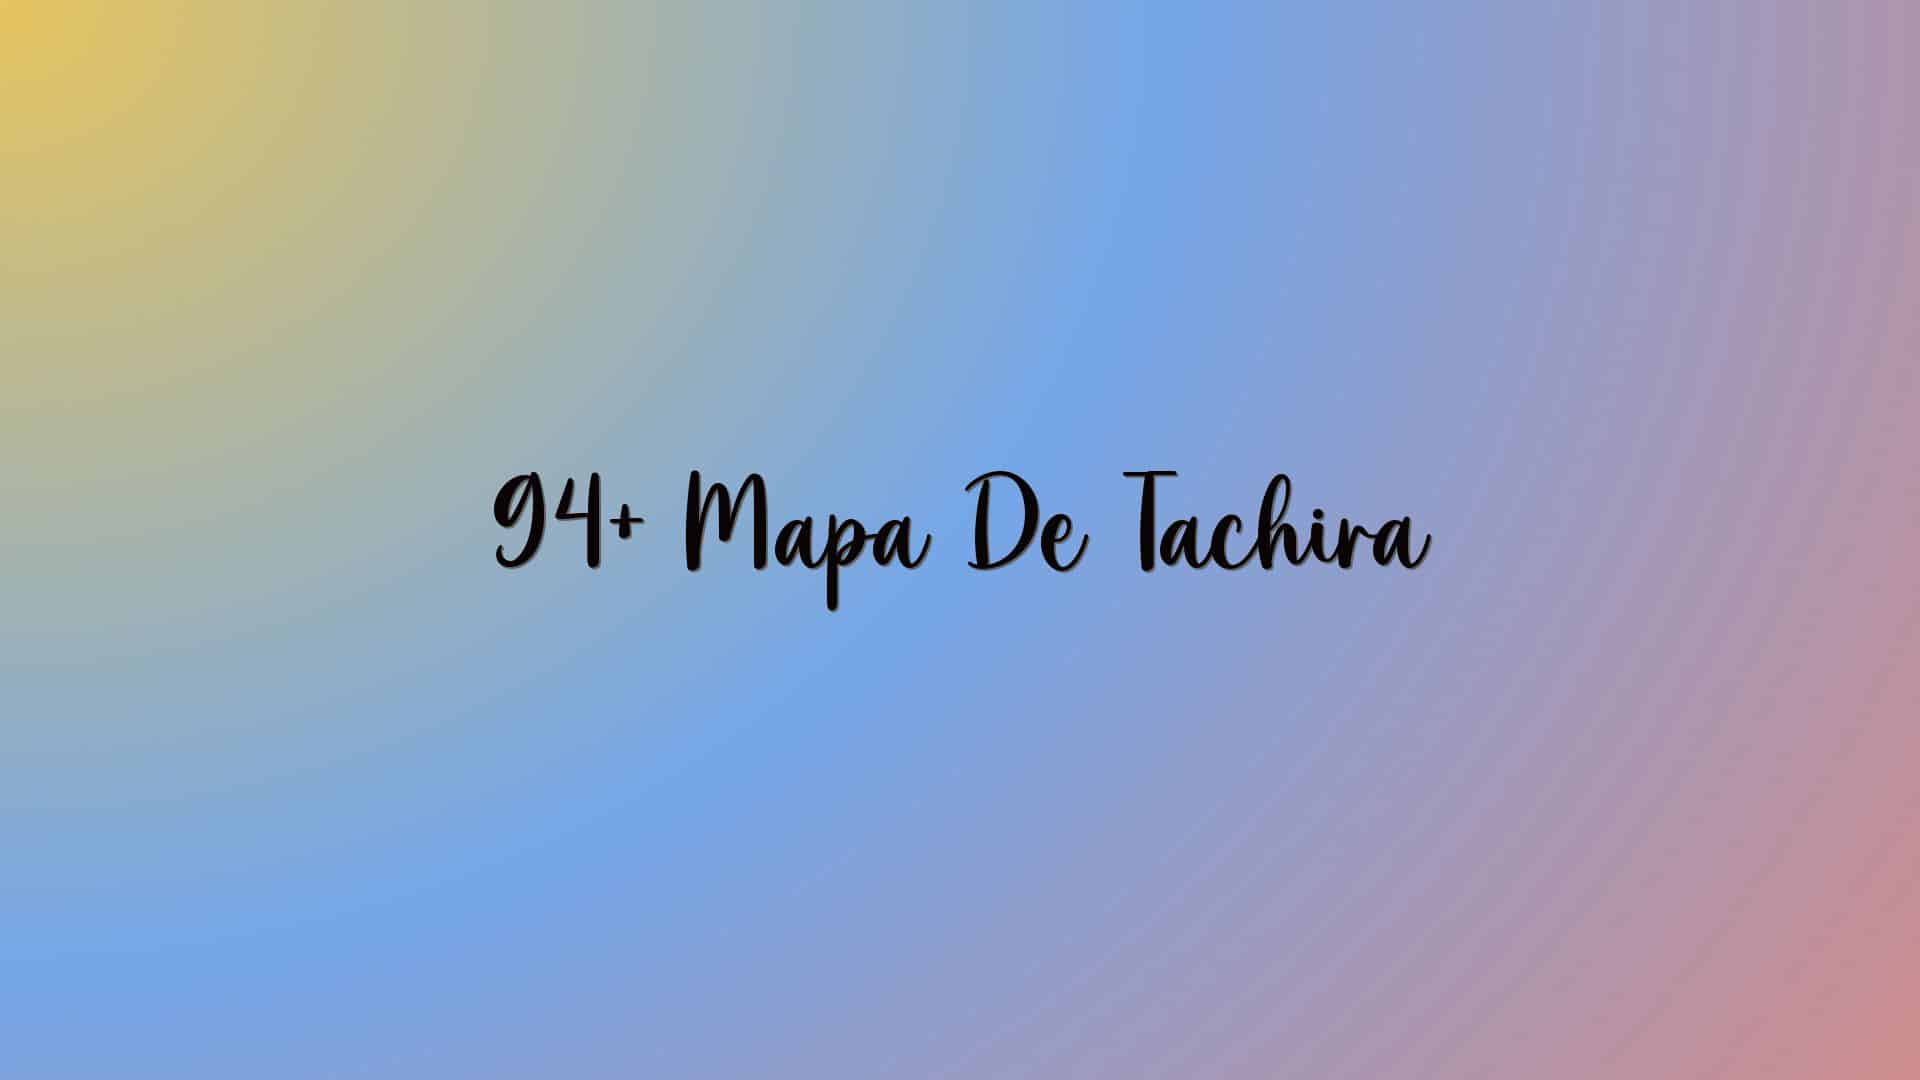 94+ Mapa De Tachira